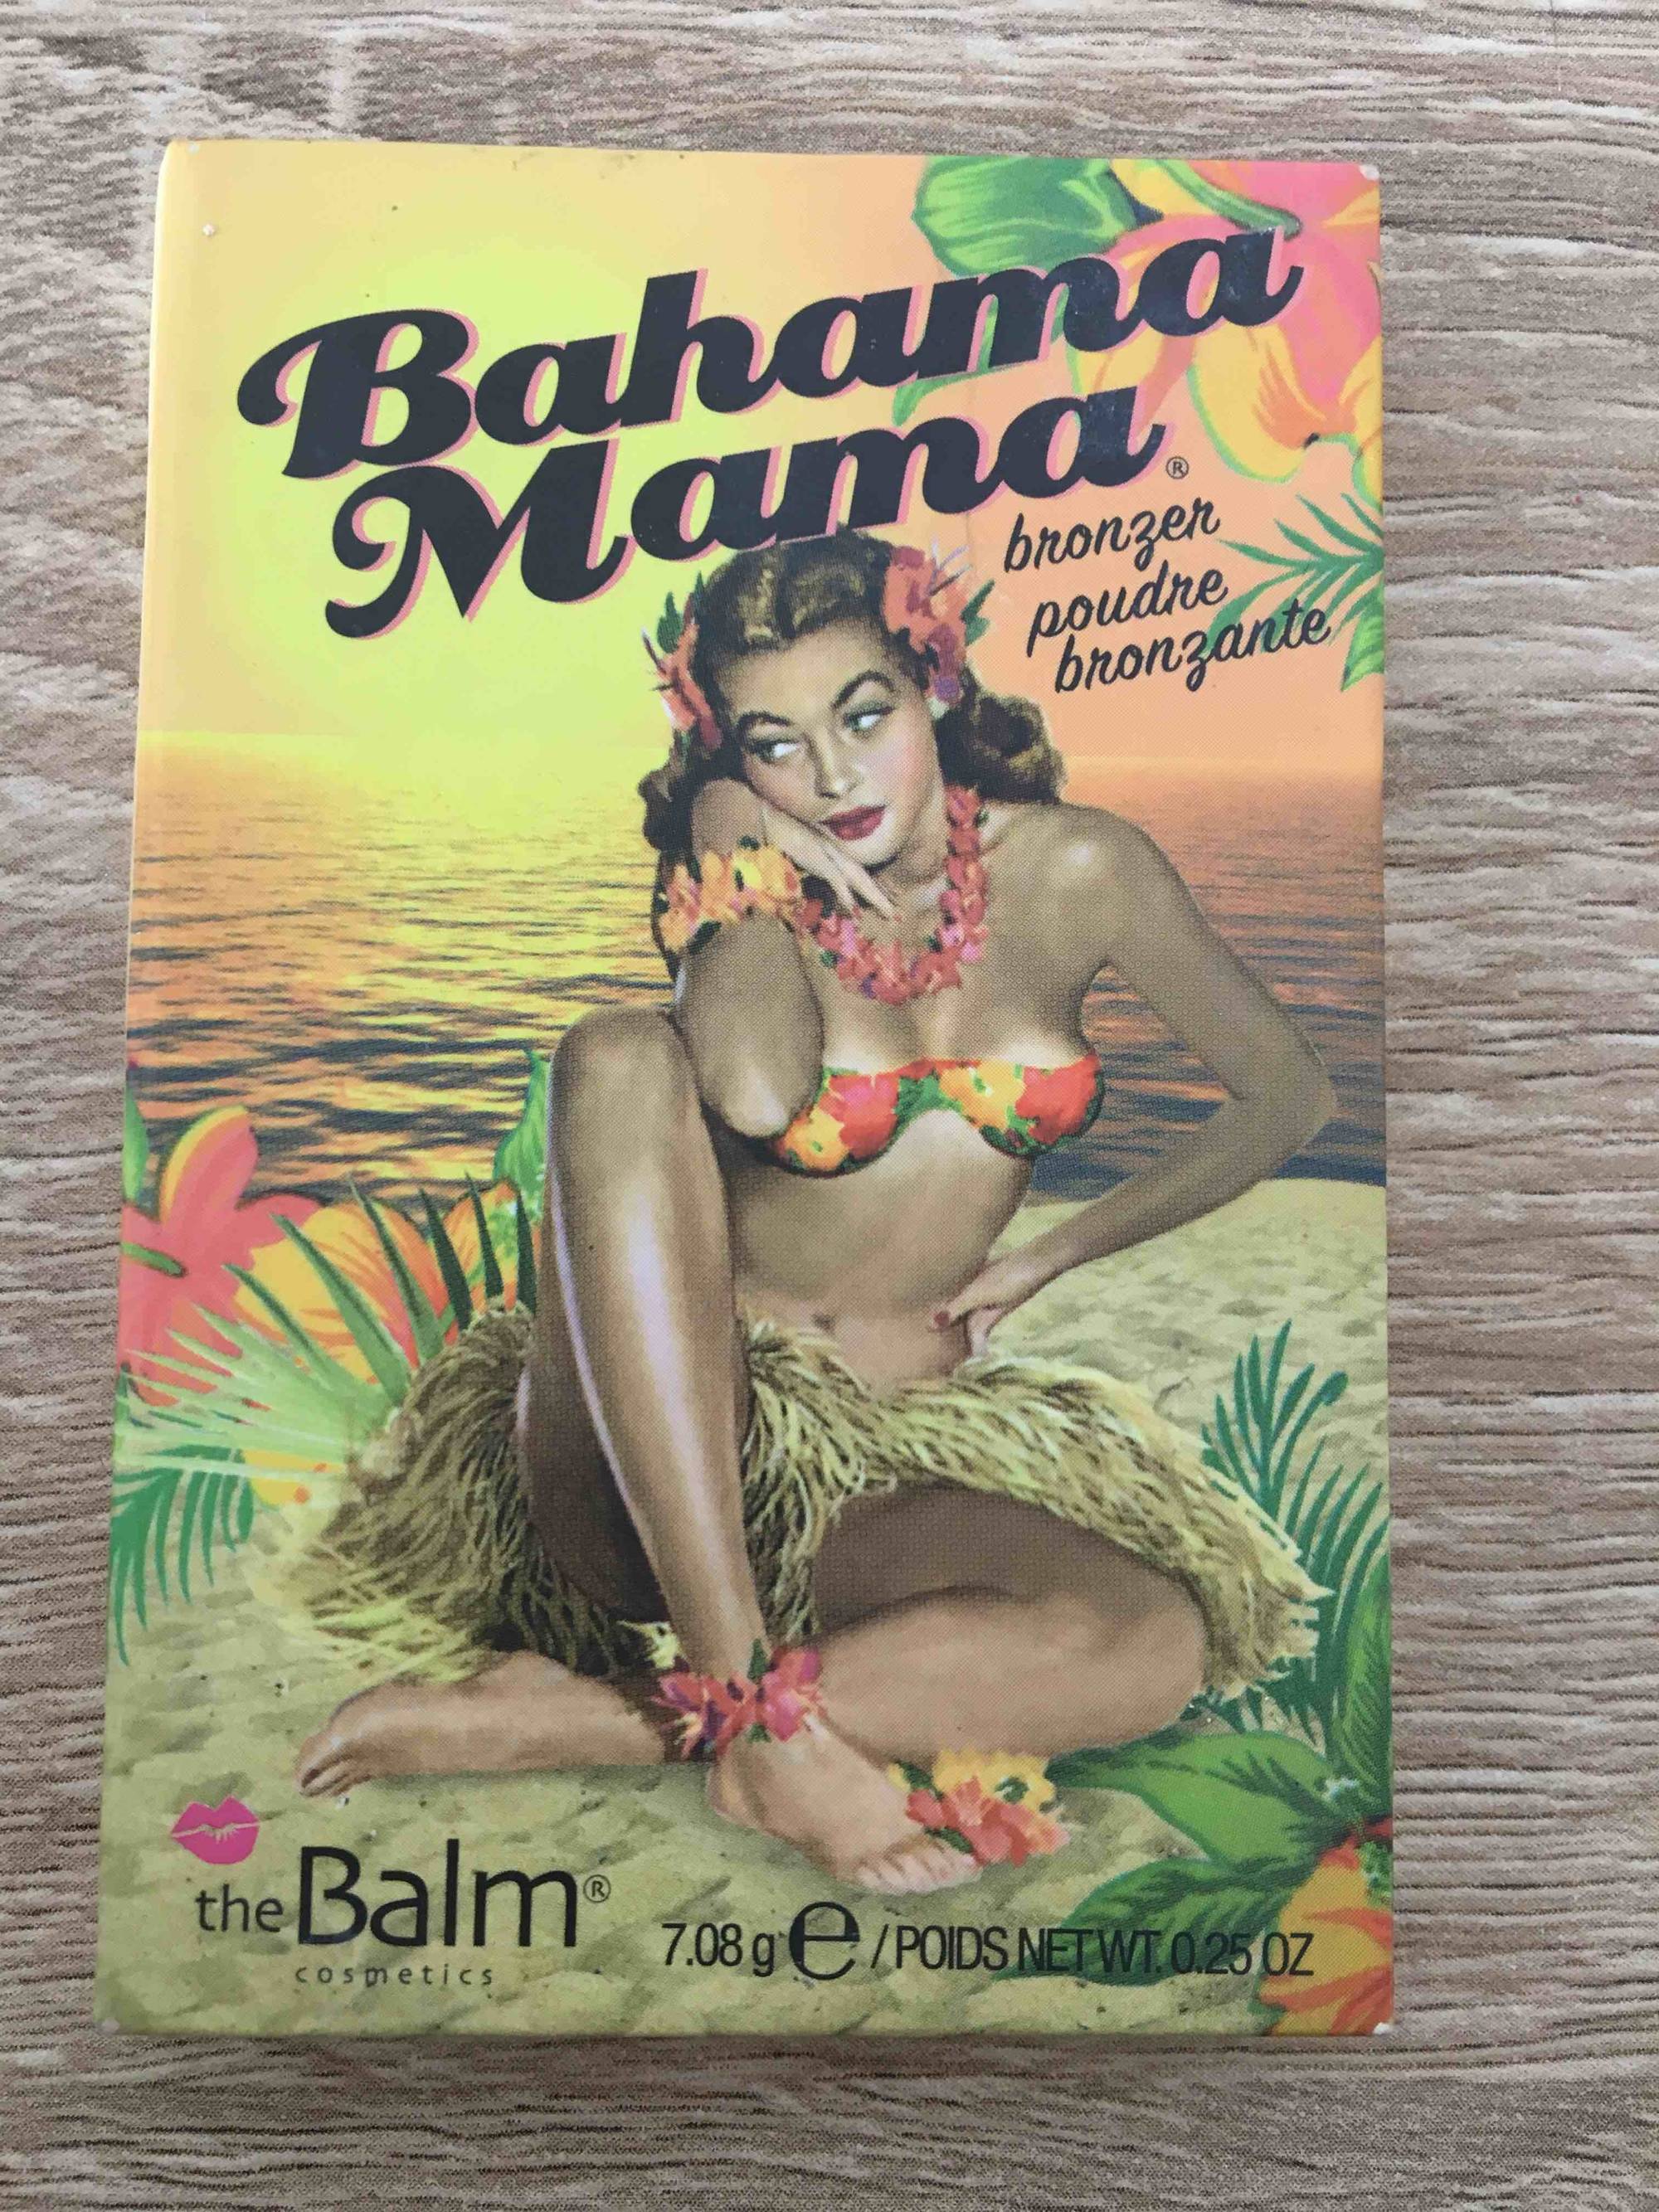 THE BALM - Bahama Mama - Bronzer poudre bronzante